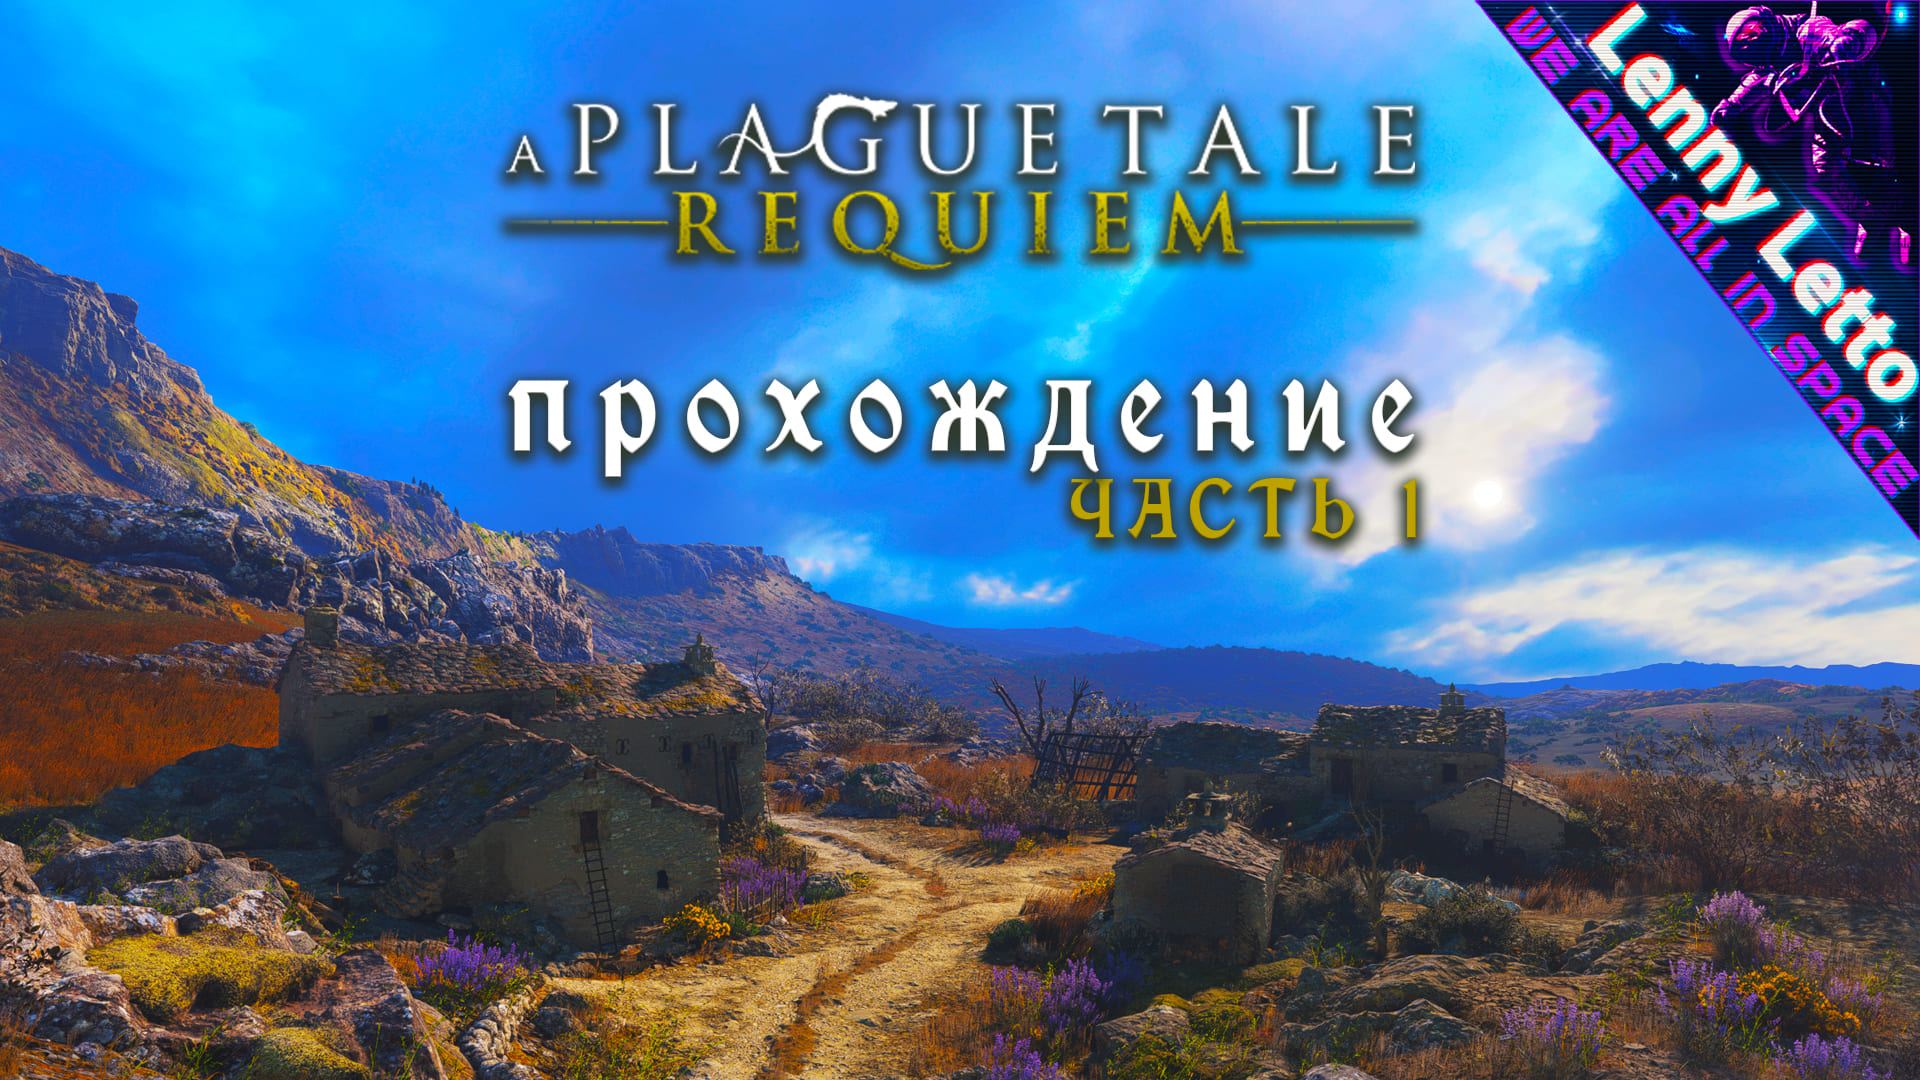 A Plague Tale: Requiem. Прохождение. Часть 1